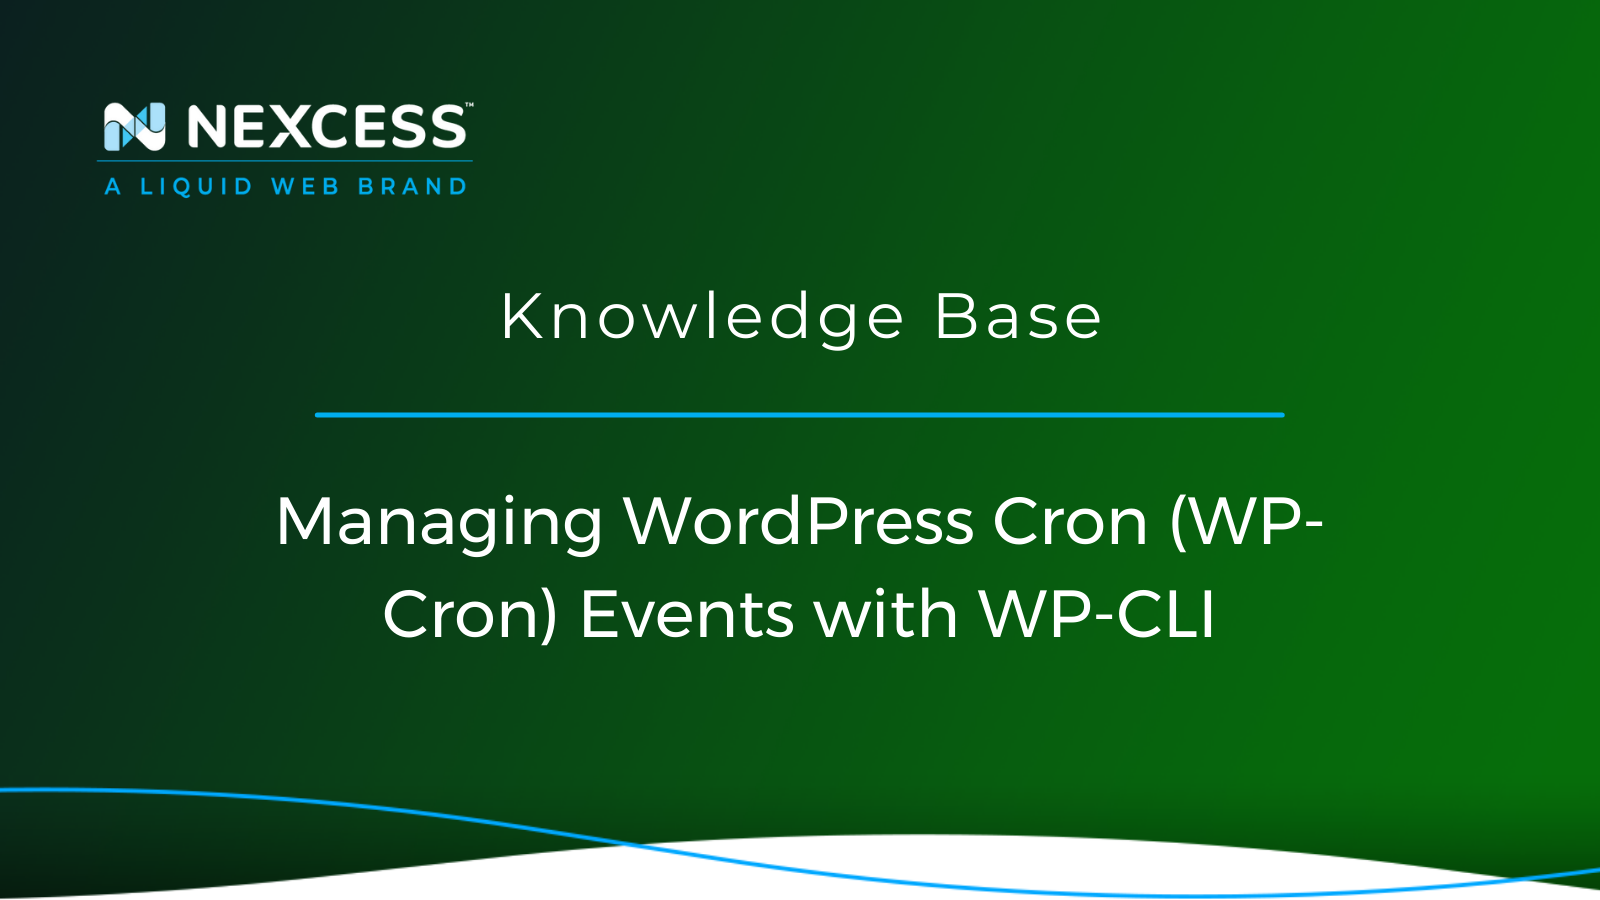 Managing WordPress Cron (WP-Cron) Events with WP-CLI